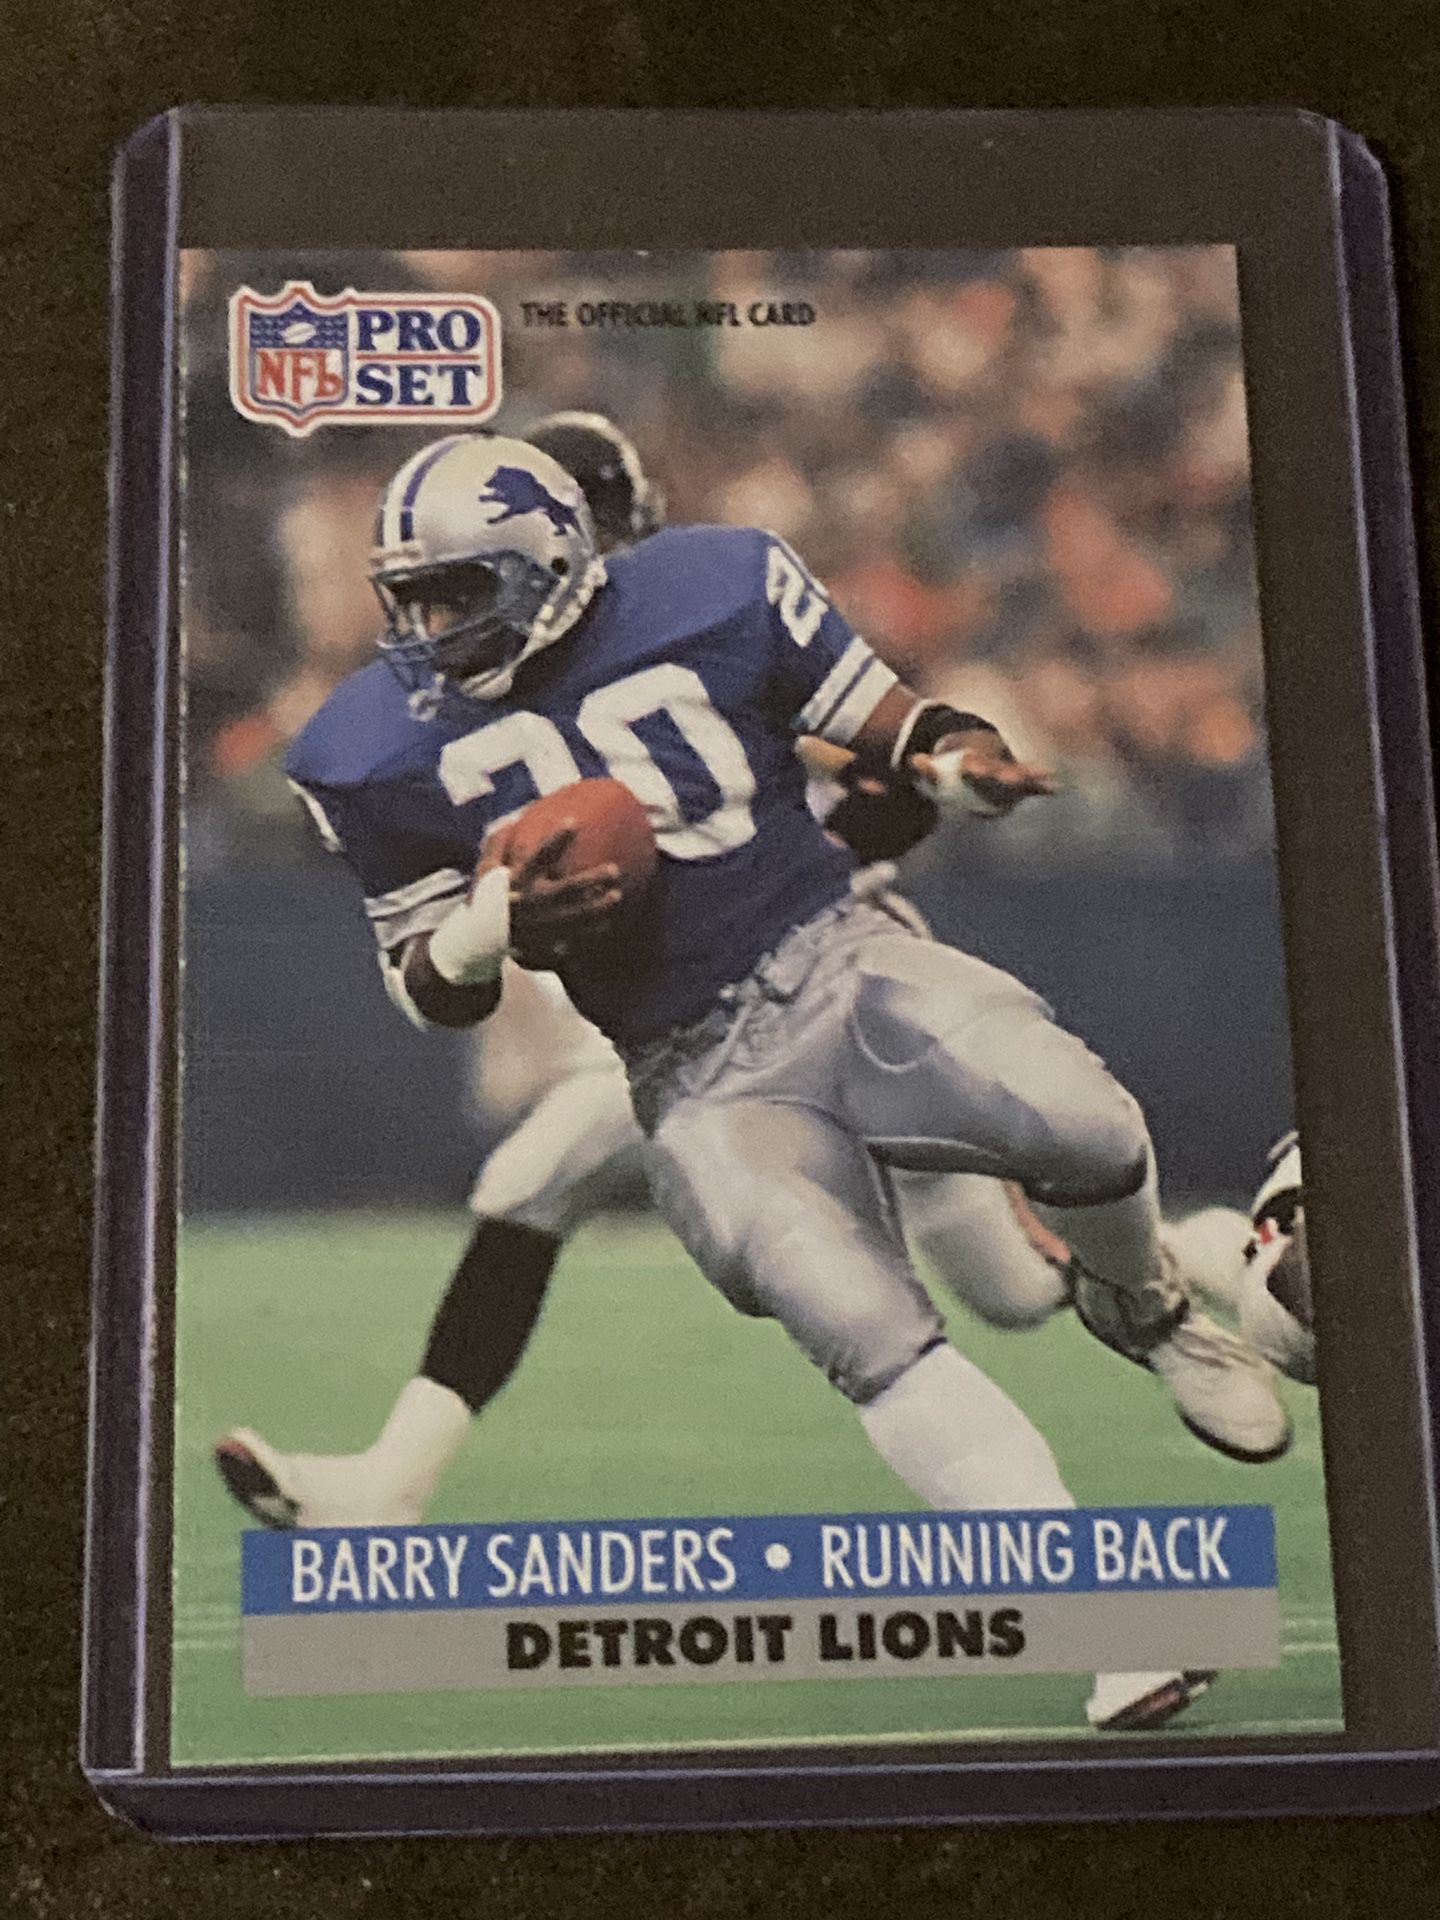 3 Barry Sanders Rookie NFL Football Cards - “Detroit Lions”